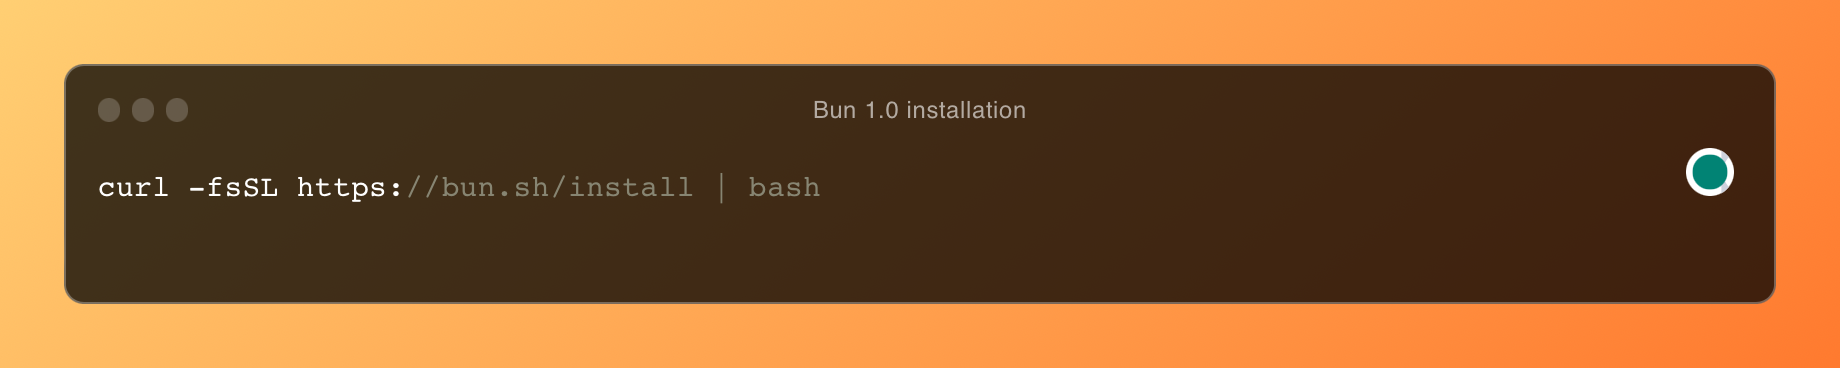 Bun 1.0 Installation